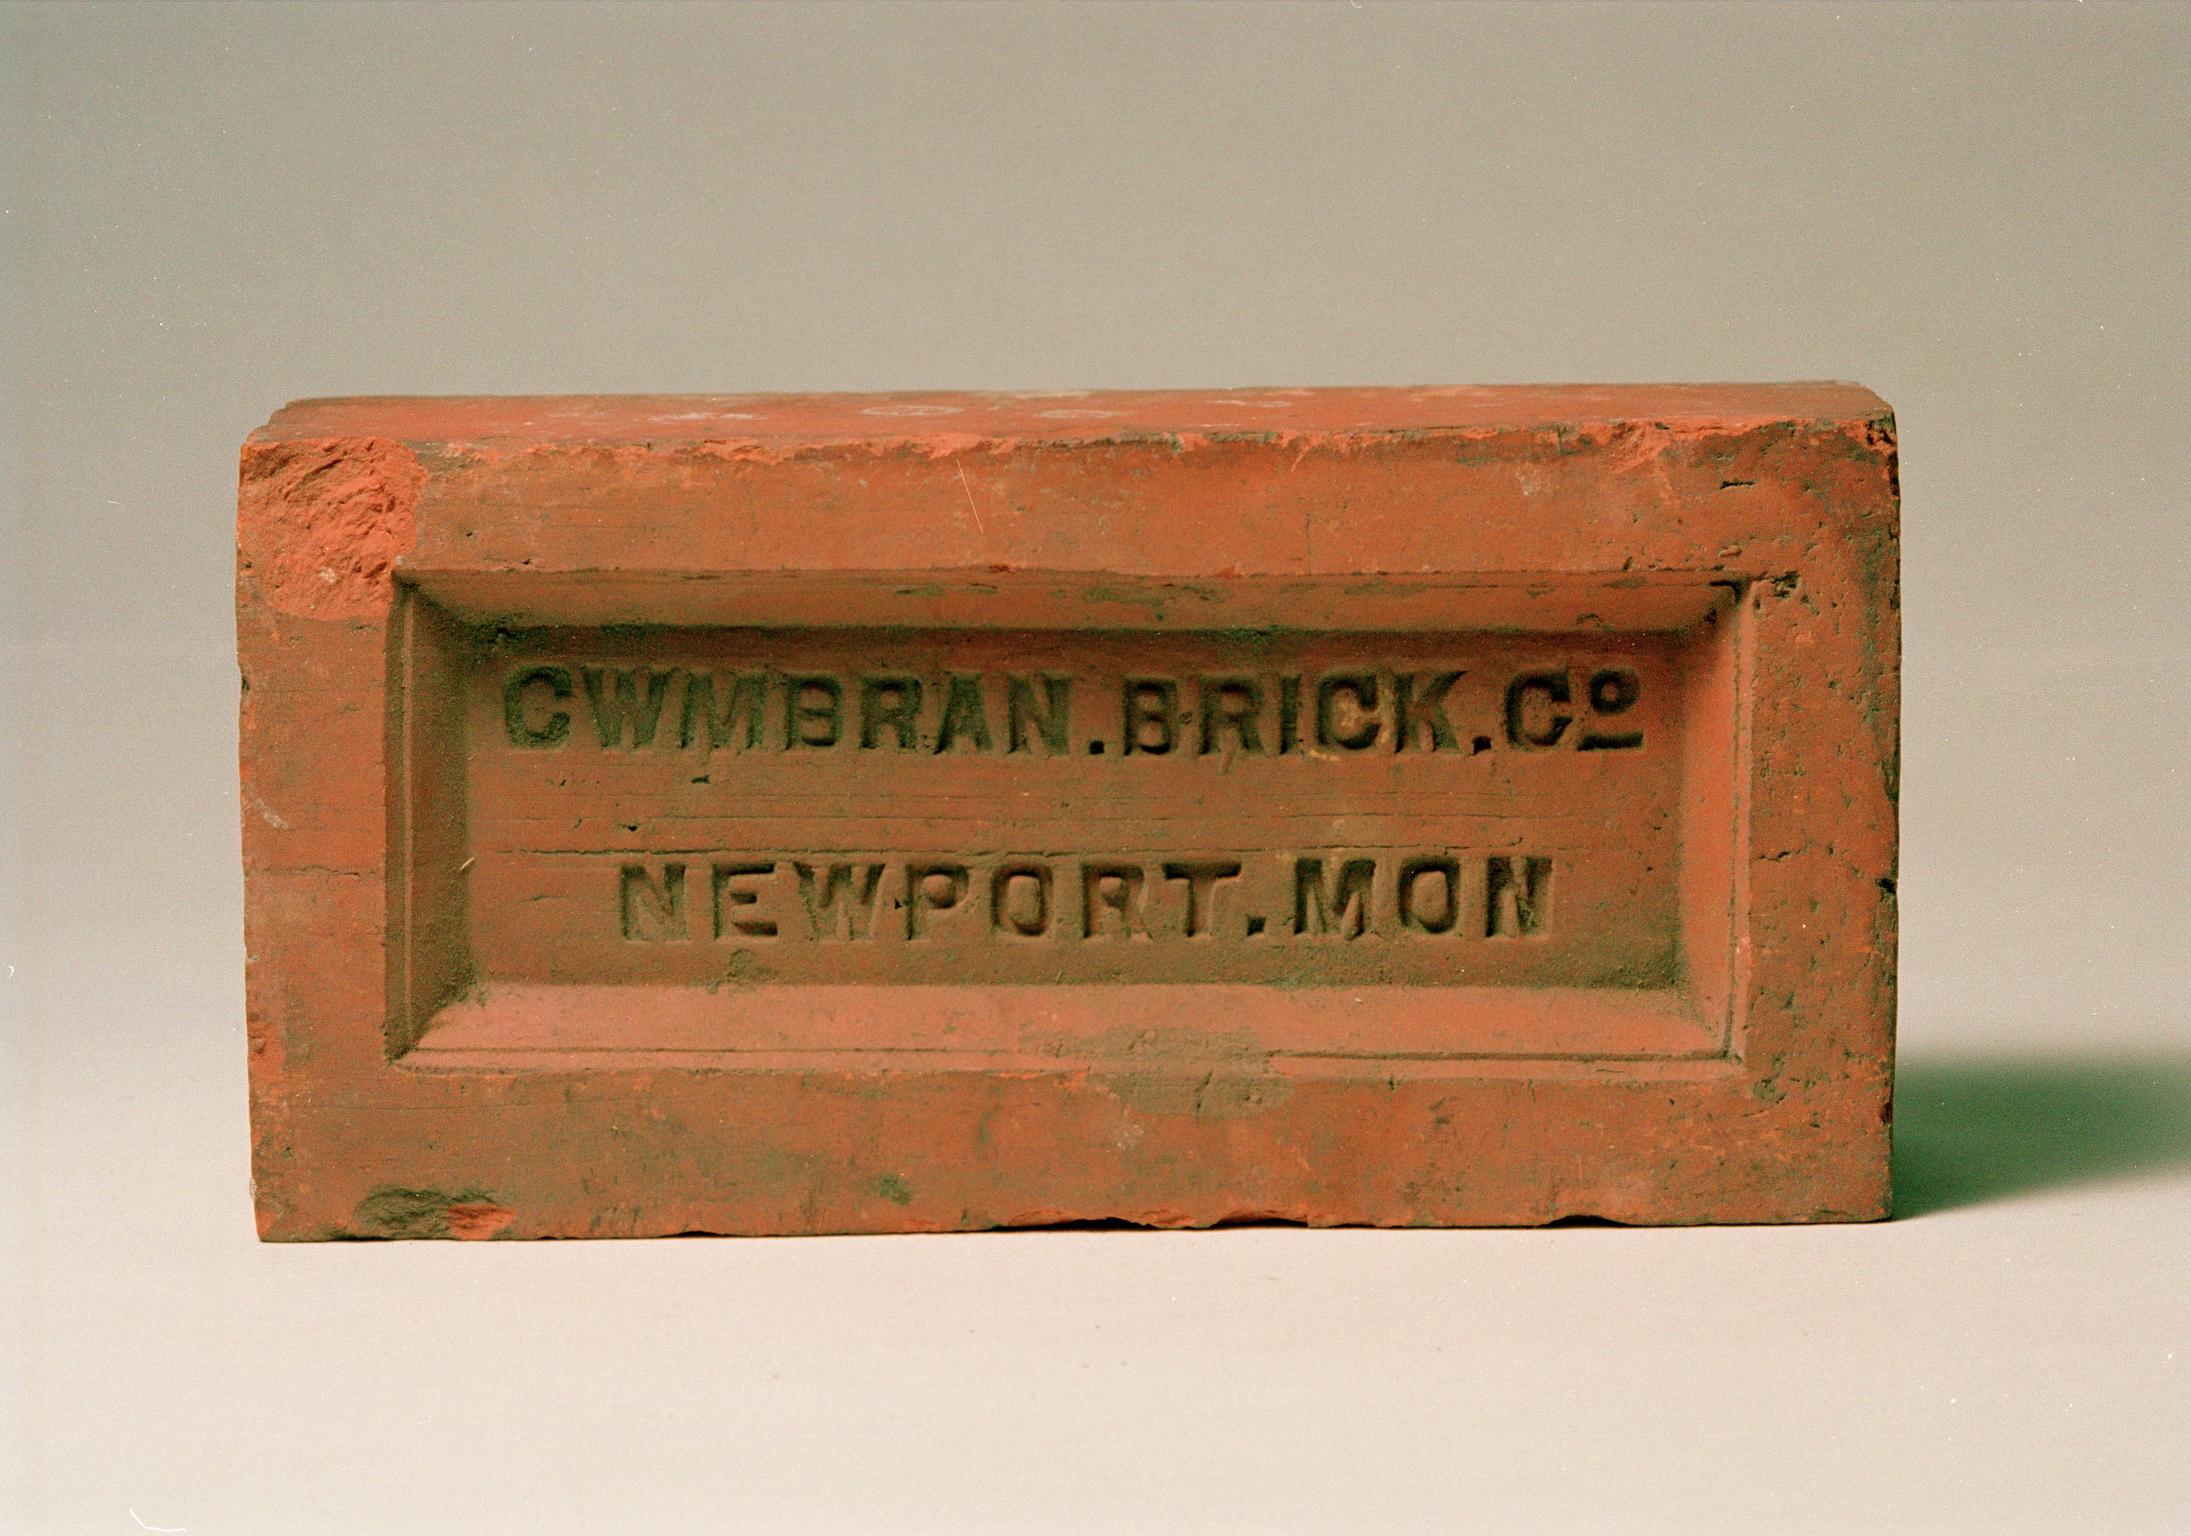 Cwmbran Brick Co., brick